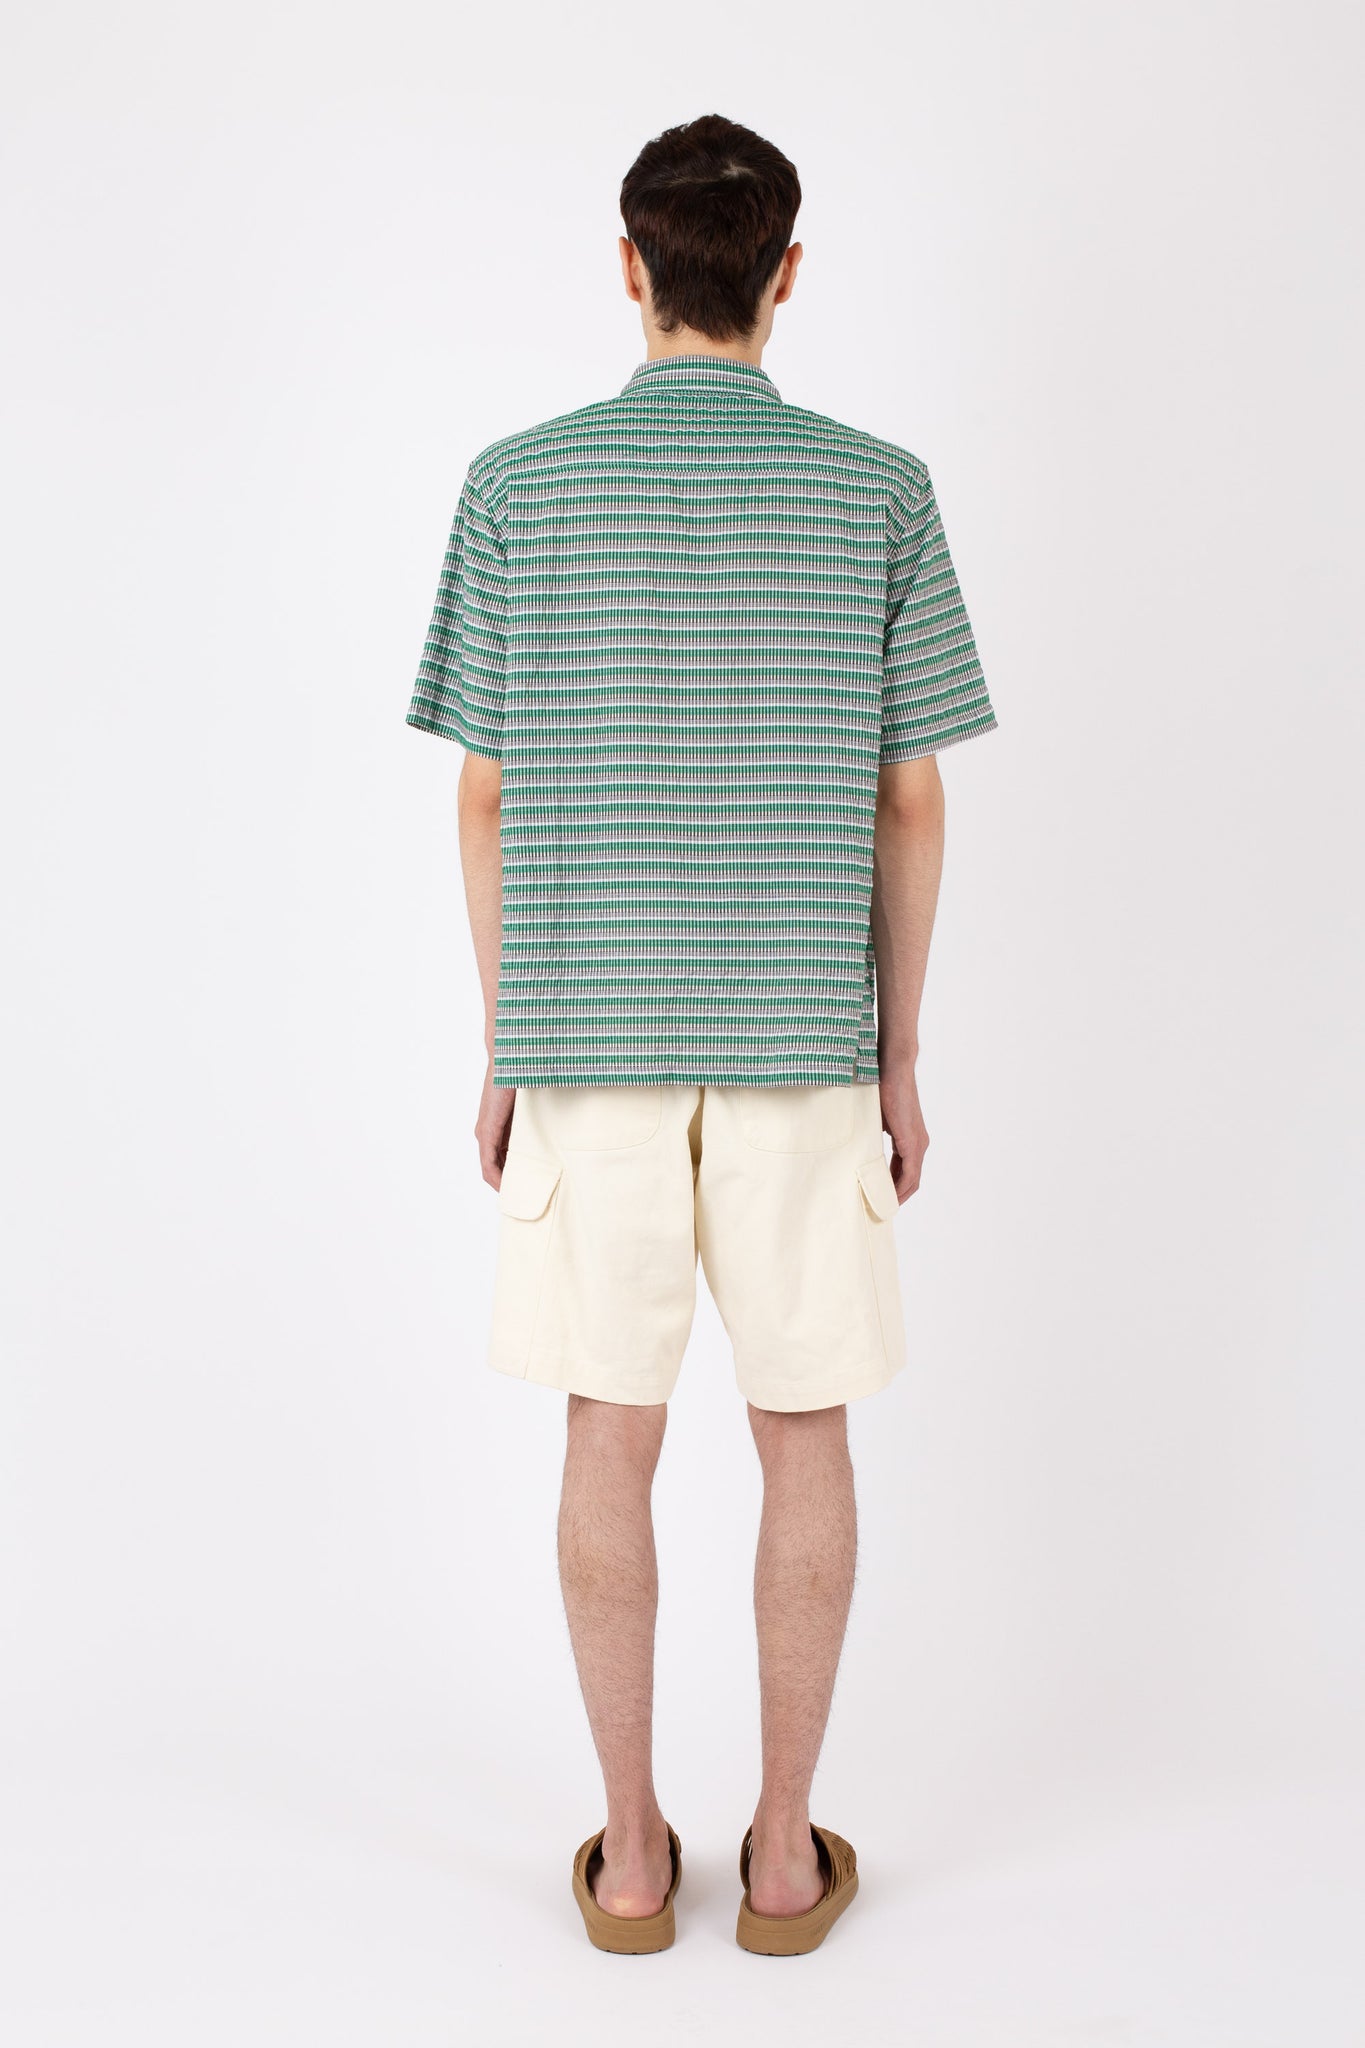 Box Shirt SS, Check Stripe, Green